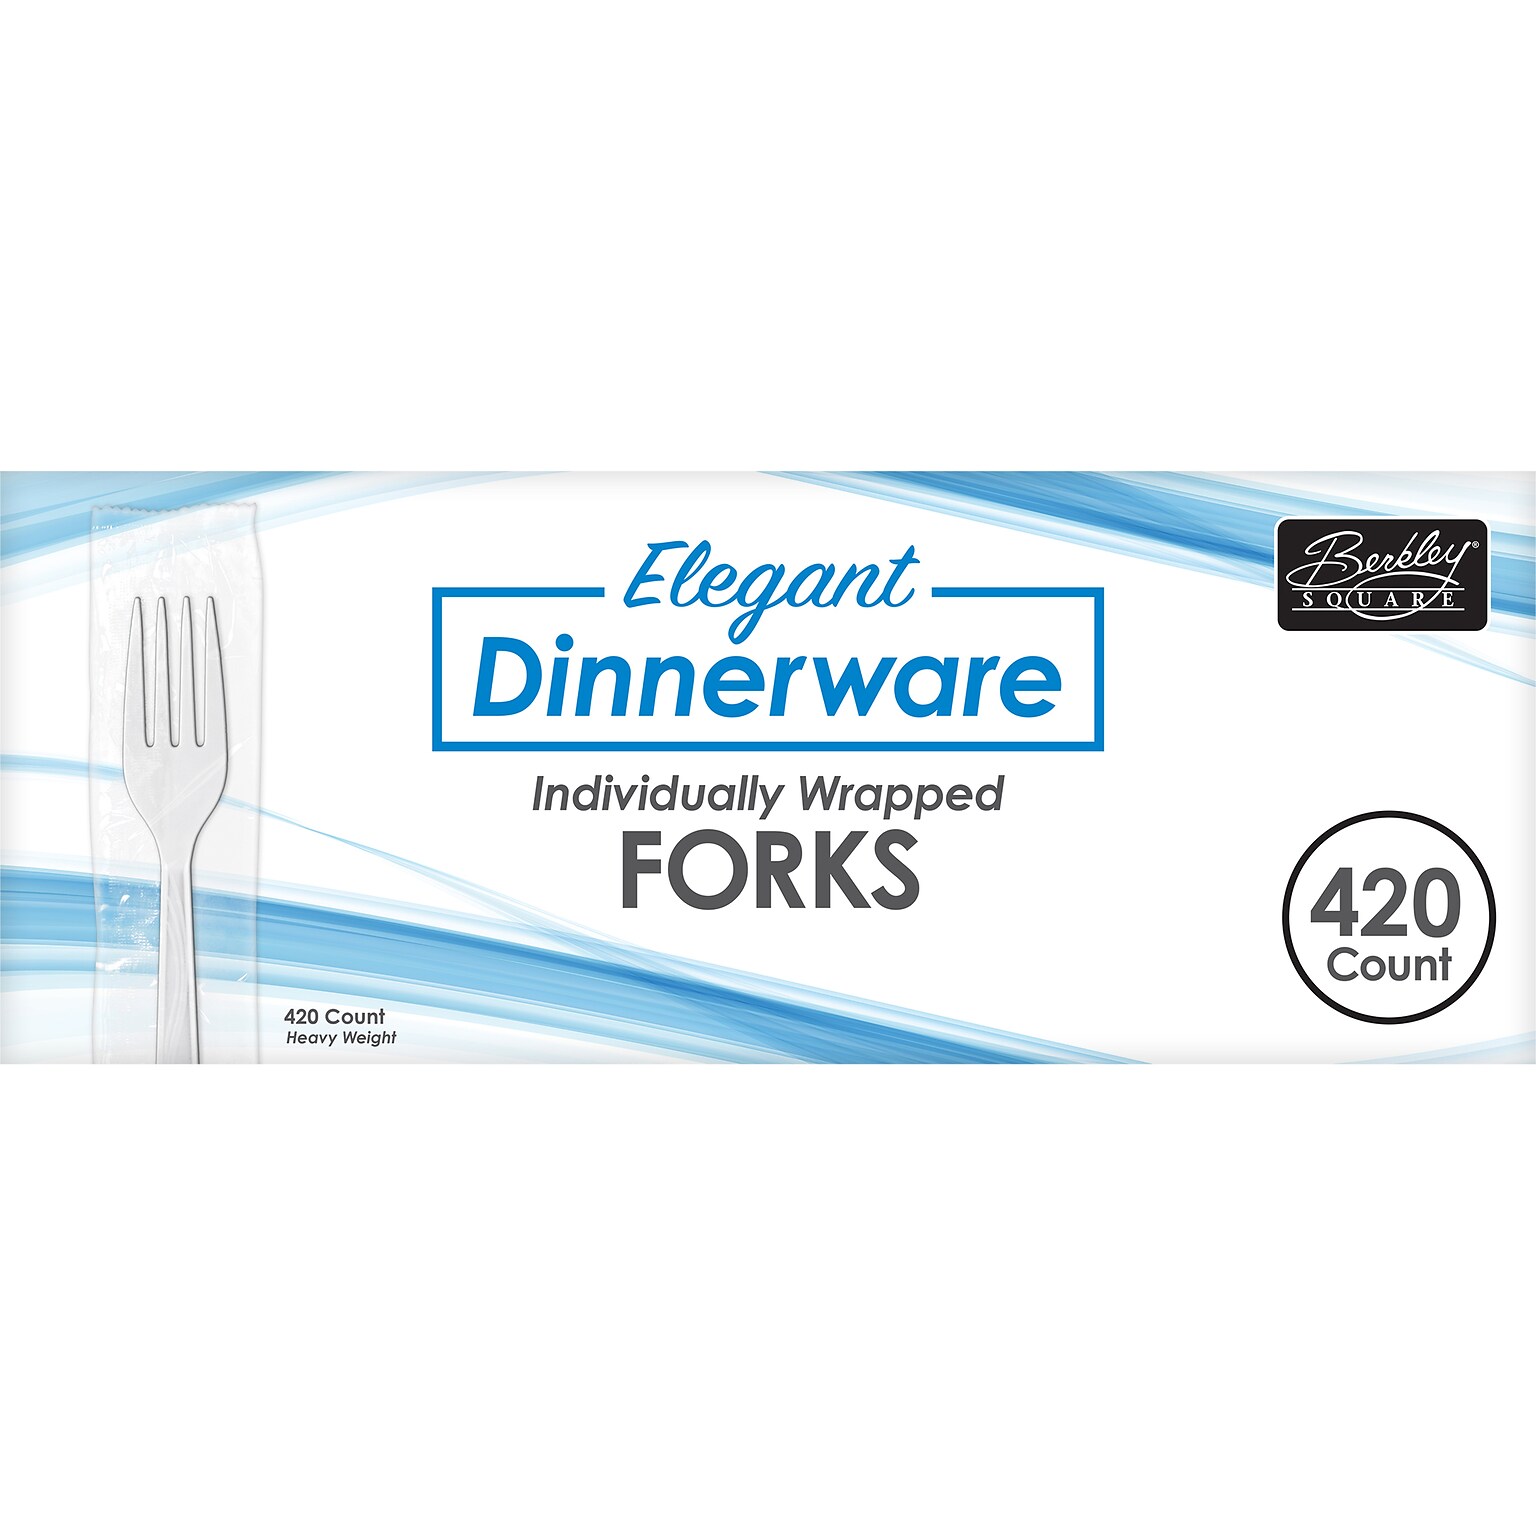 Berkley Square Elegant Dinnerware Plastic Fork, Heavy-Weight, White, 420/Box (1072510)